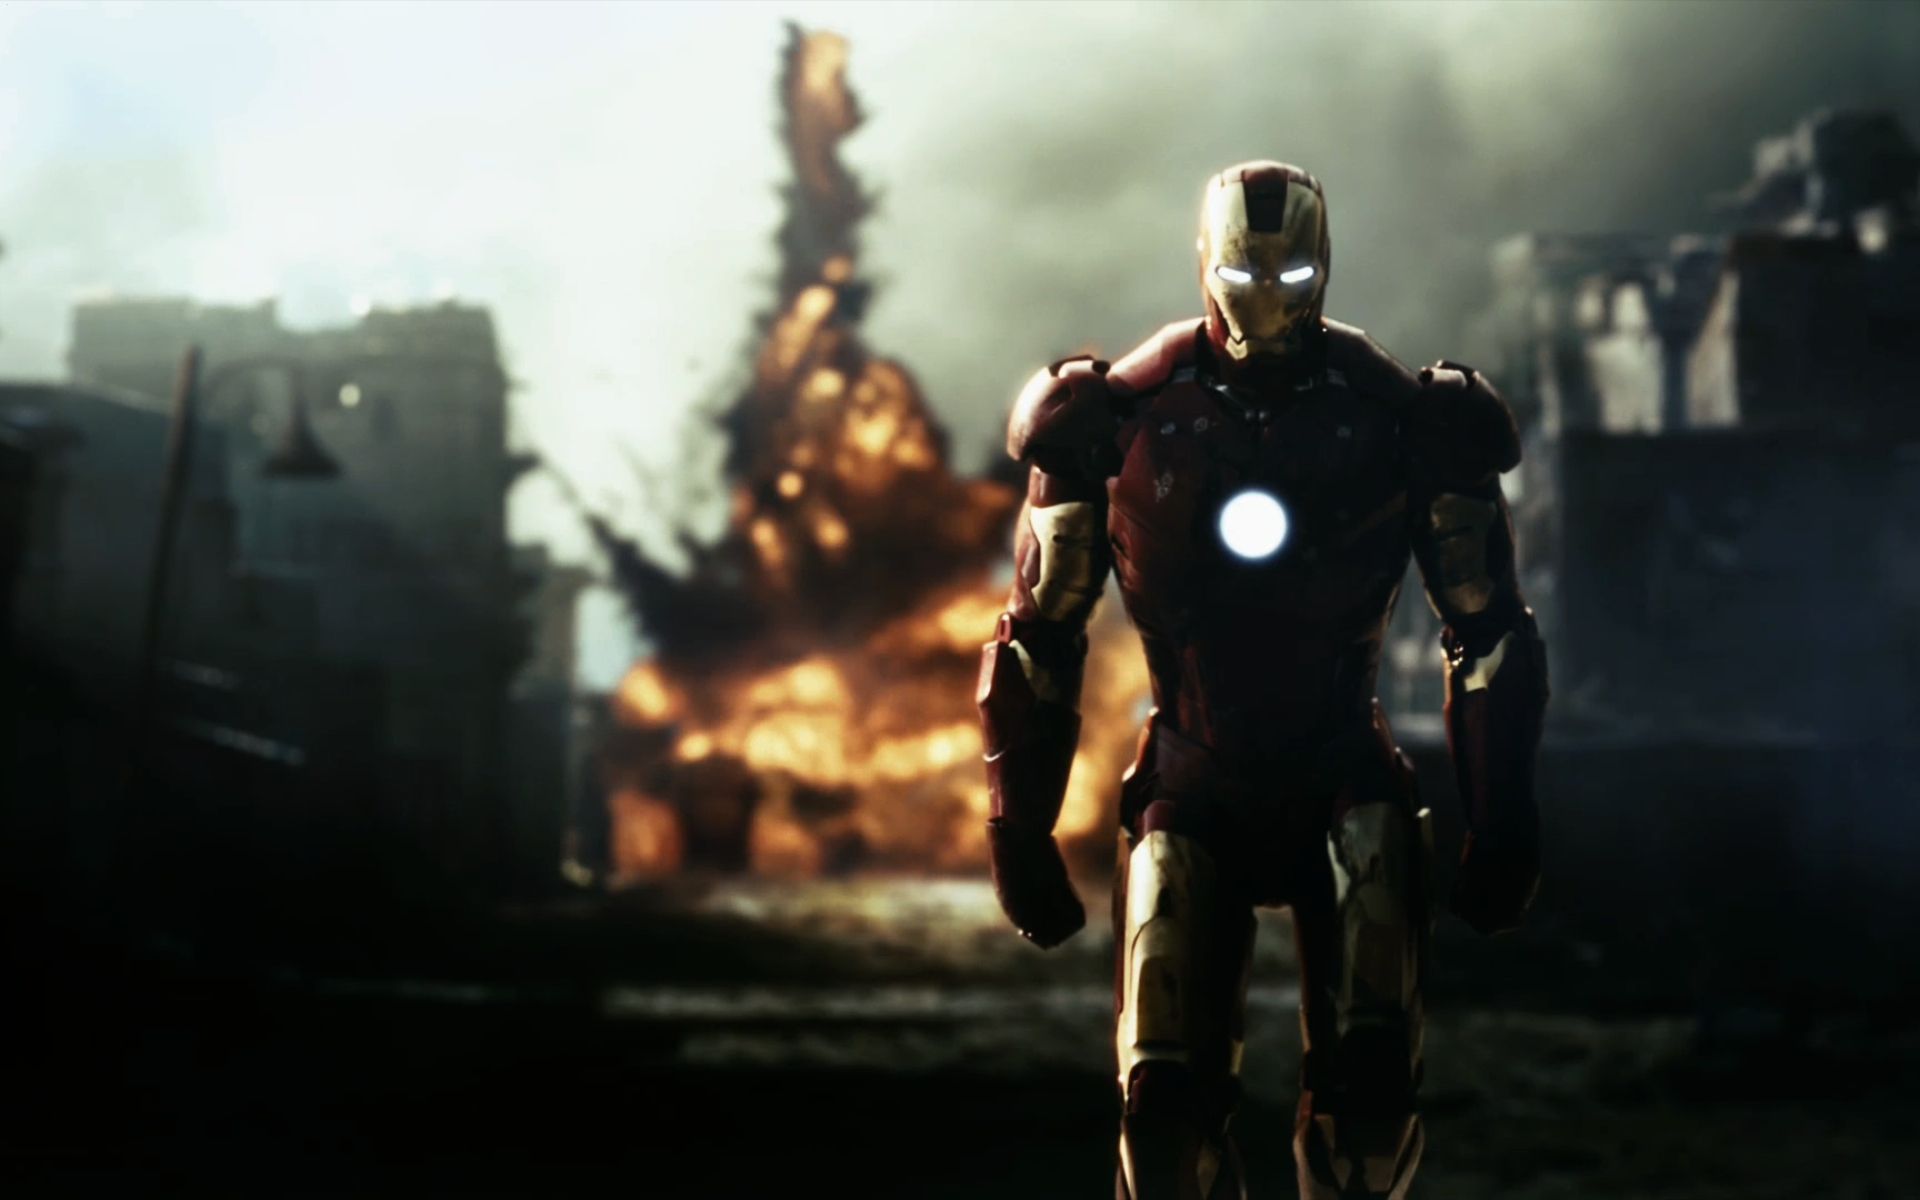 Iron Man desktop background download | Wallpapers, Backgrounds ...